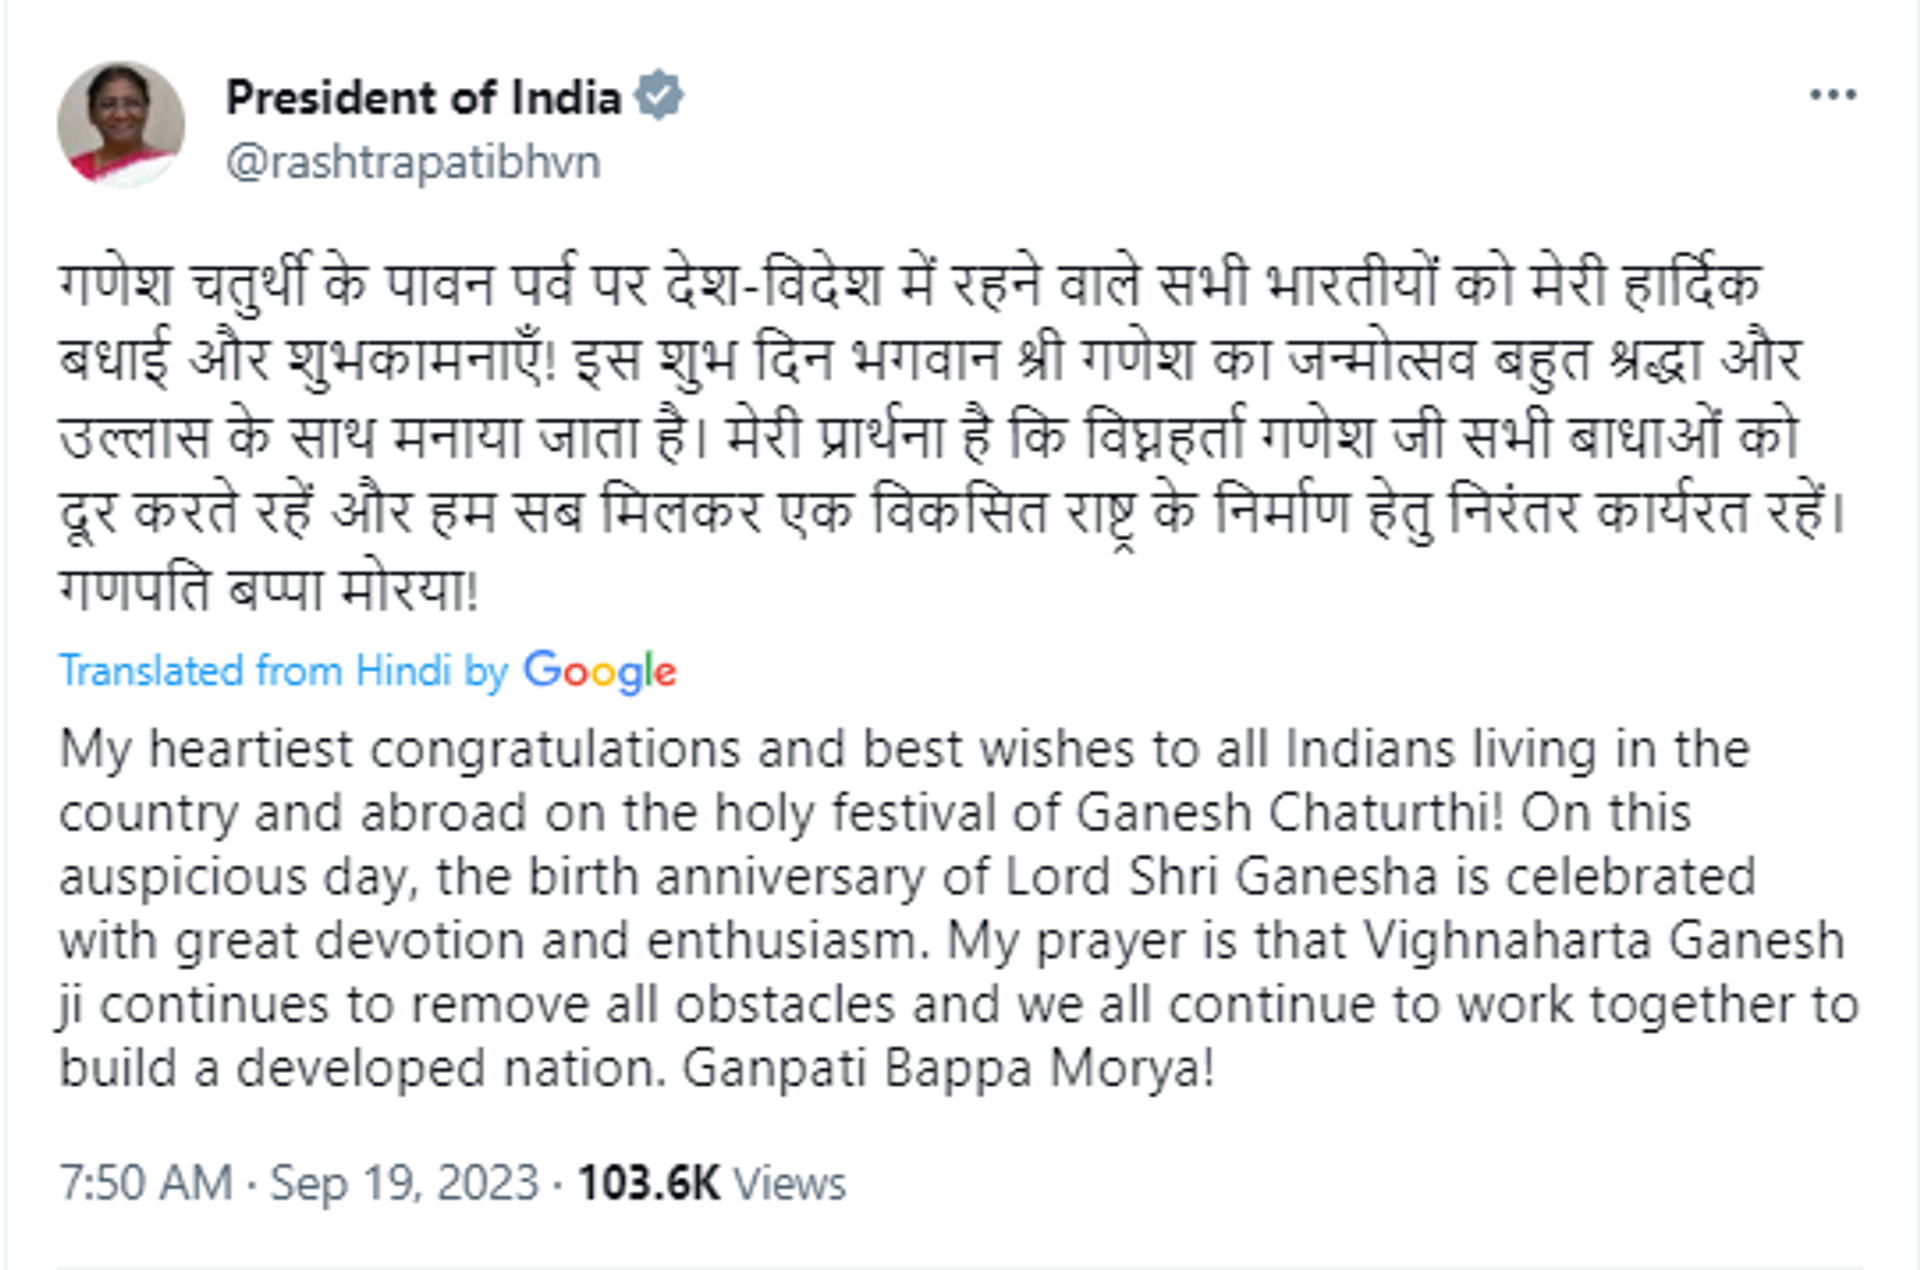 India's president Droupadi Murmu extends wishes to countrymen on Ganesh Chaturthi festival - Sputnik India, 1920, 19.09.2023